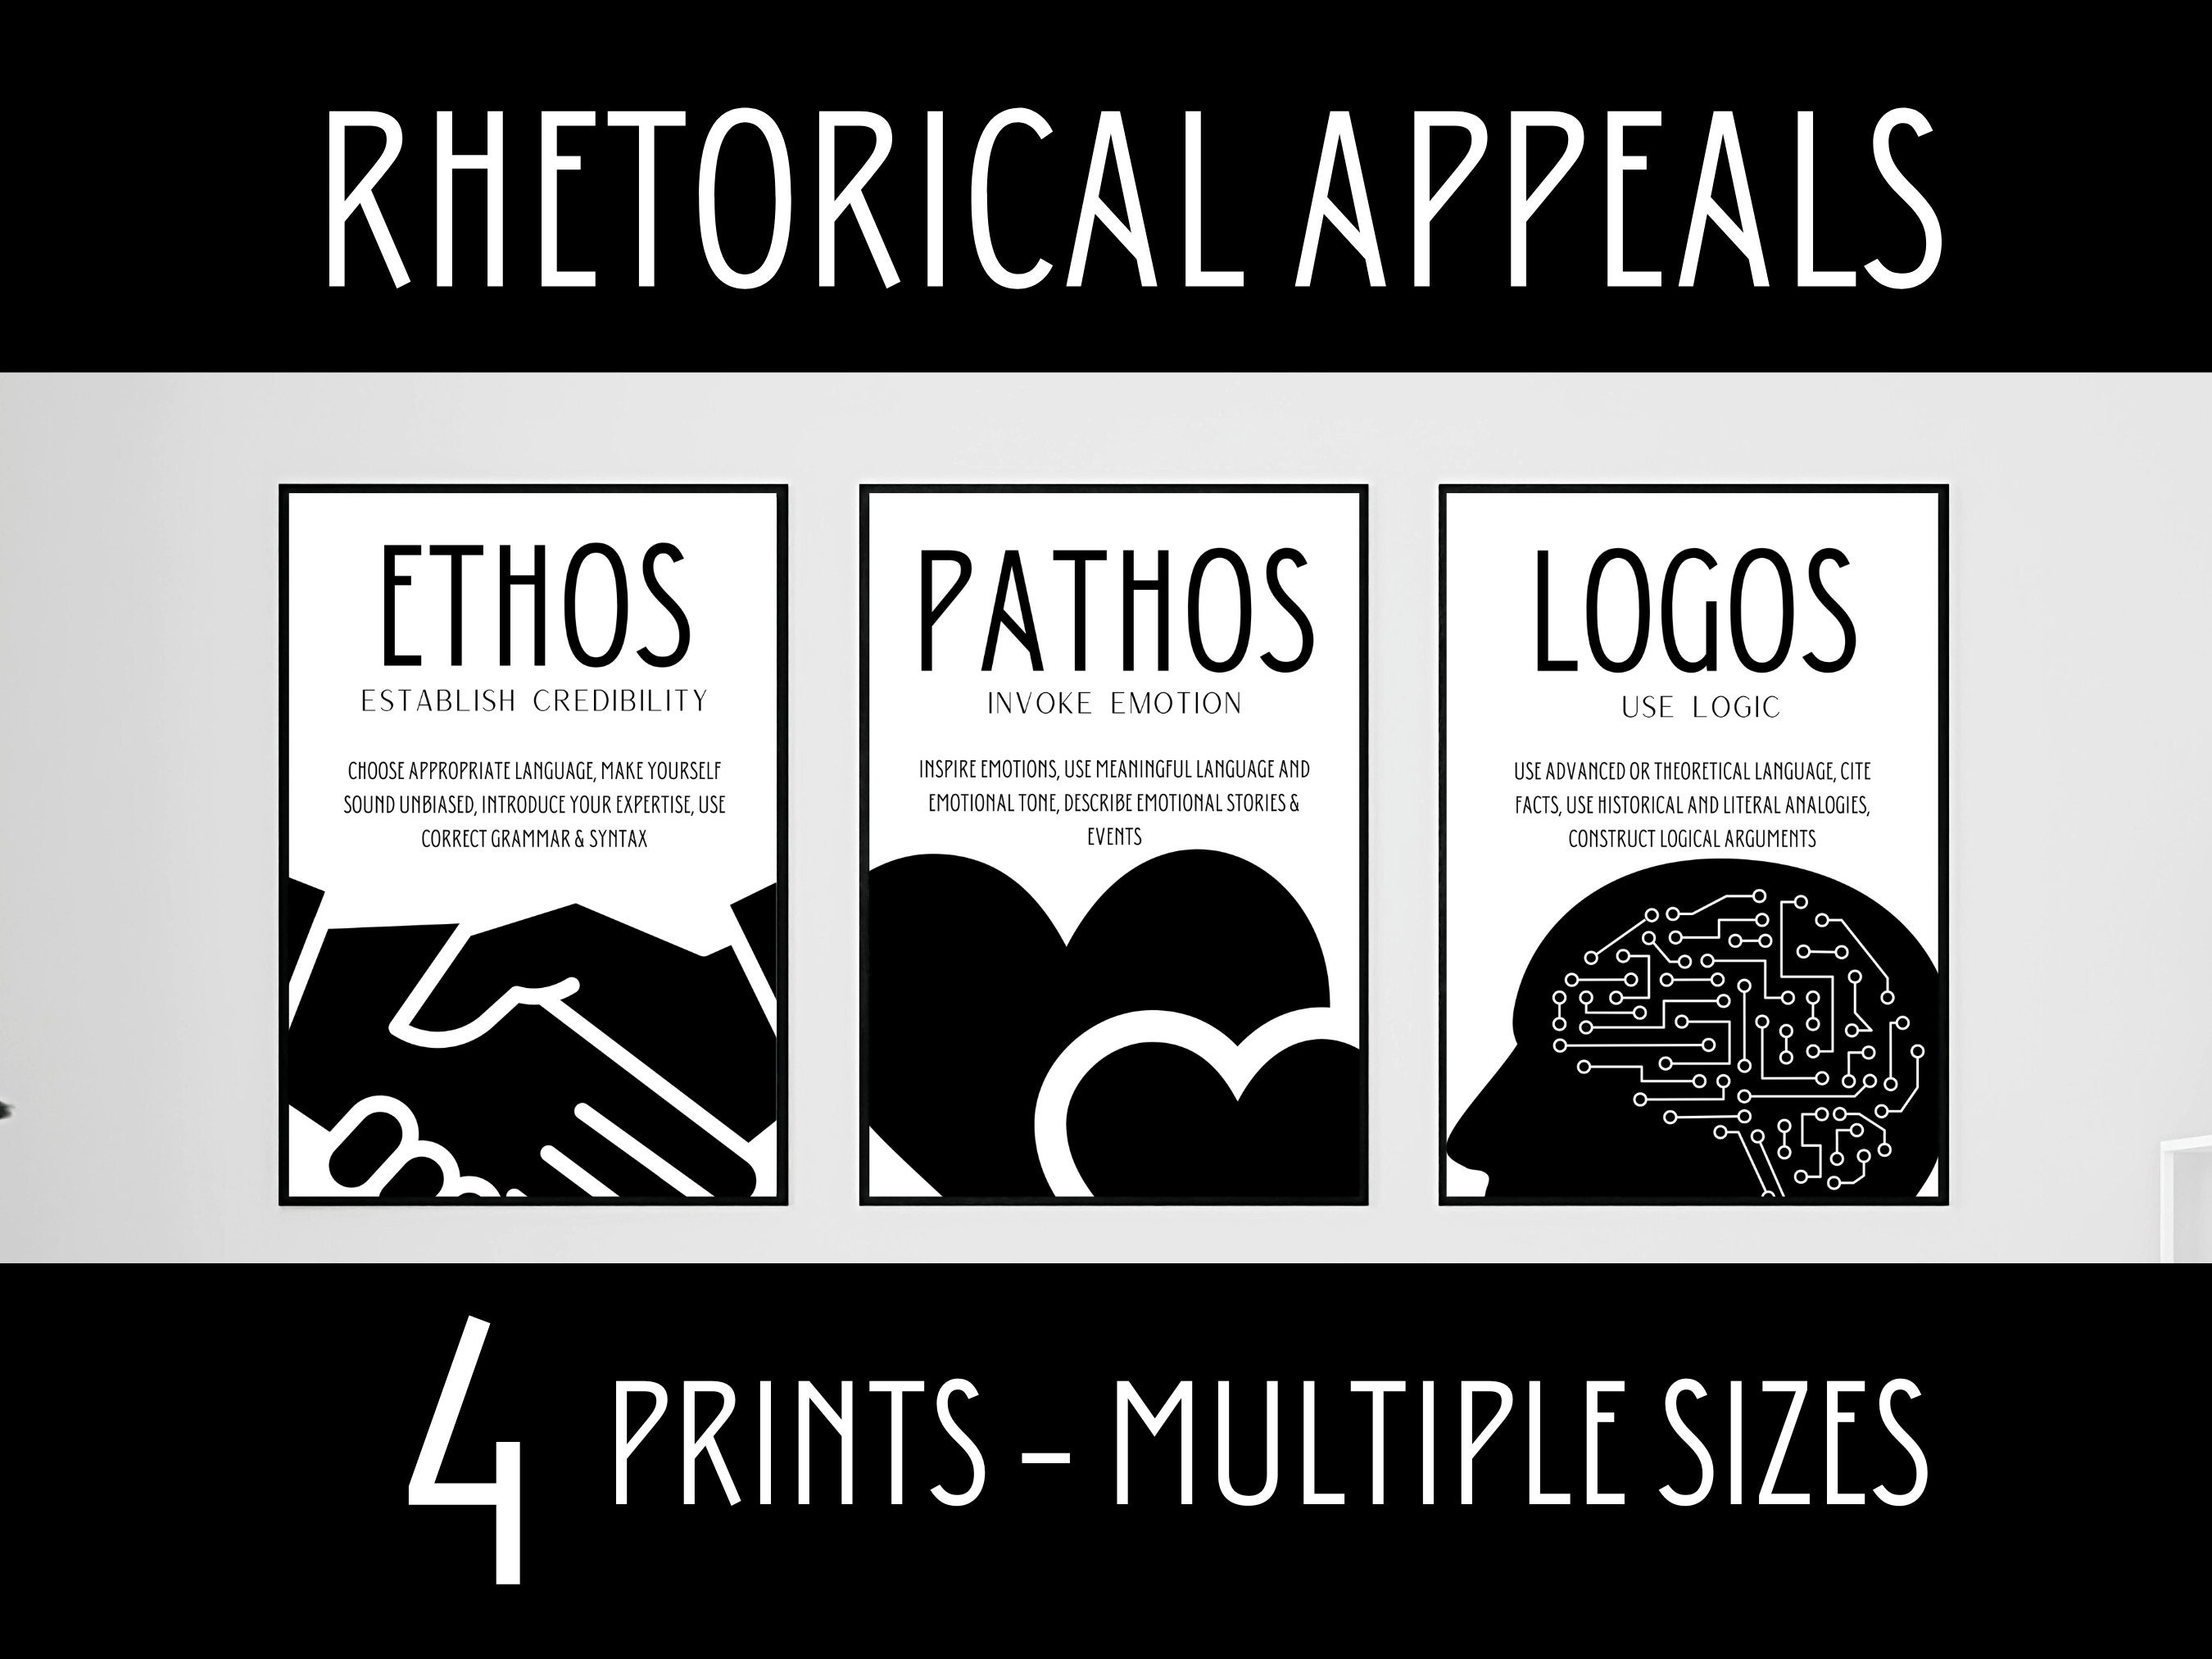 Rhetorical Appeals, Ethos, Pathos, Logos, English Classroom